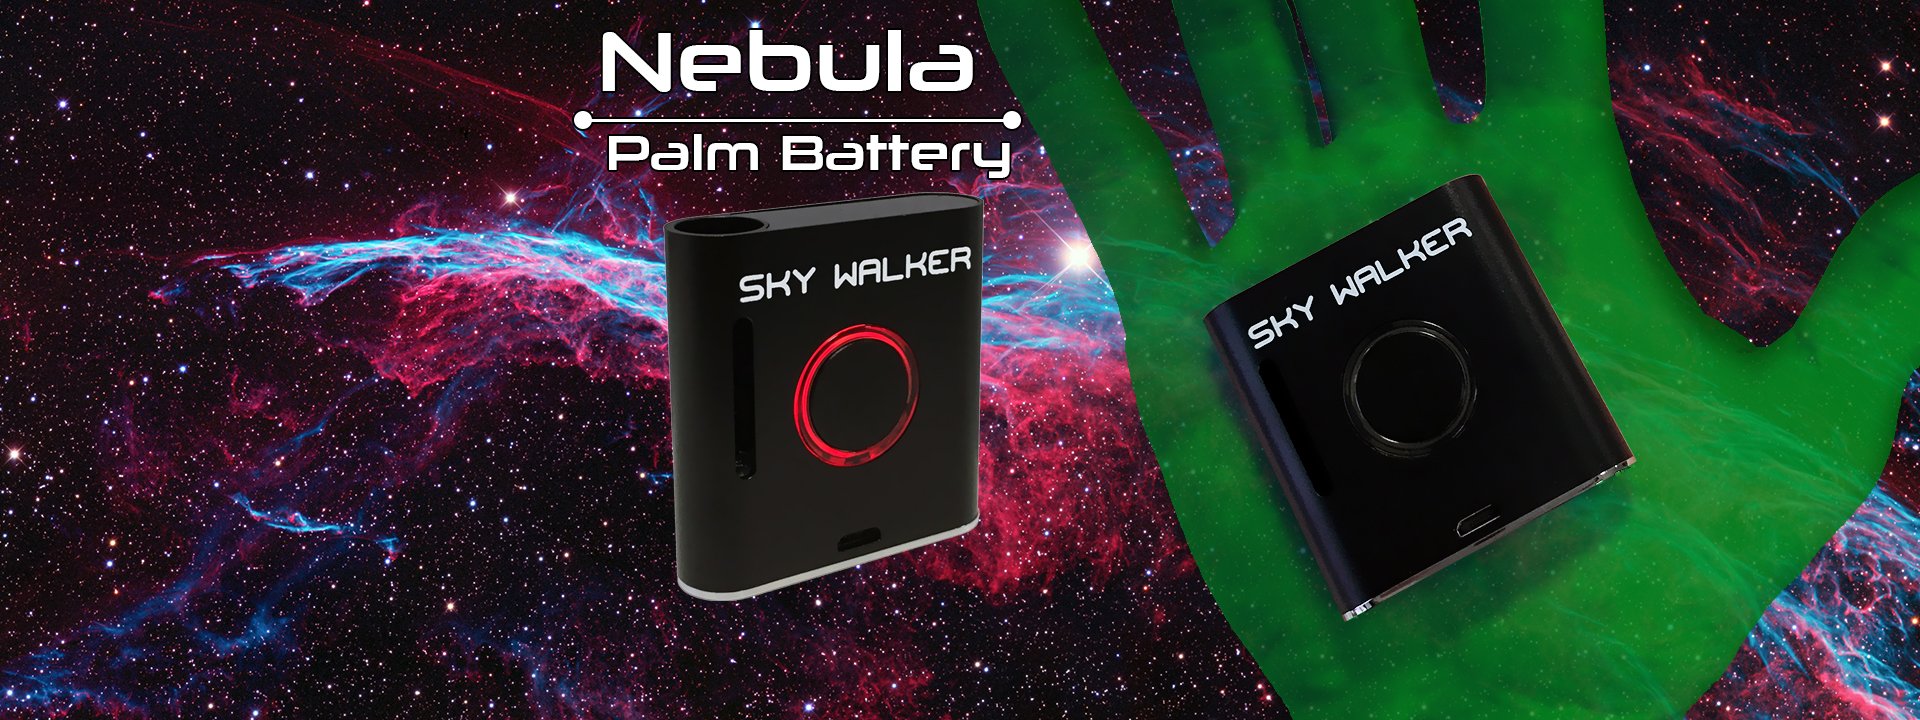 Sky Walker Nebula 900mAh Powerful Palm Battery